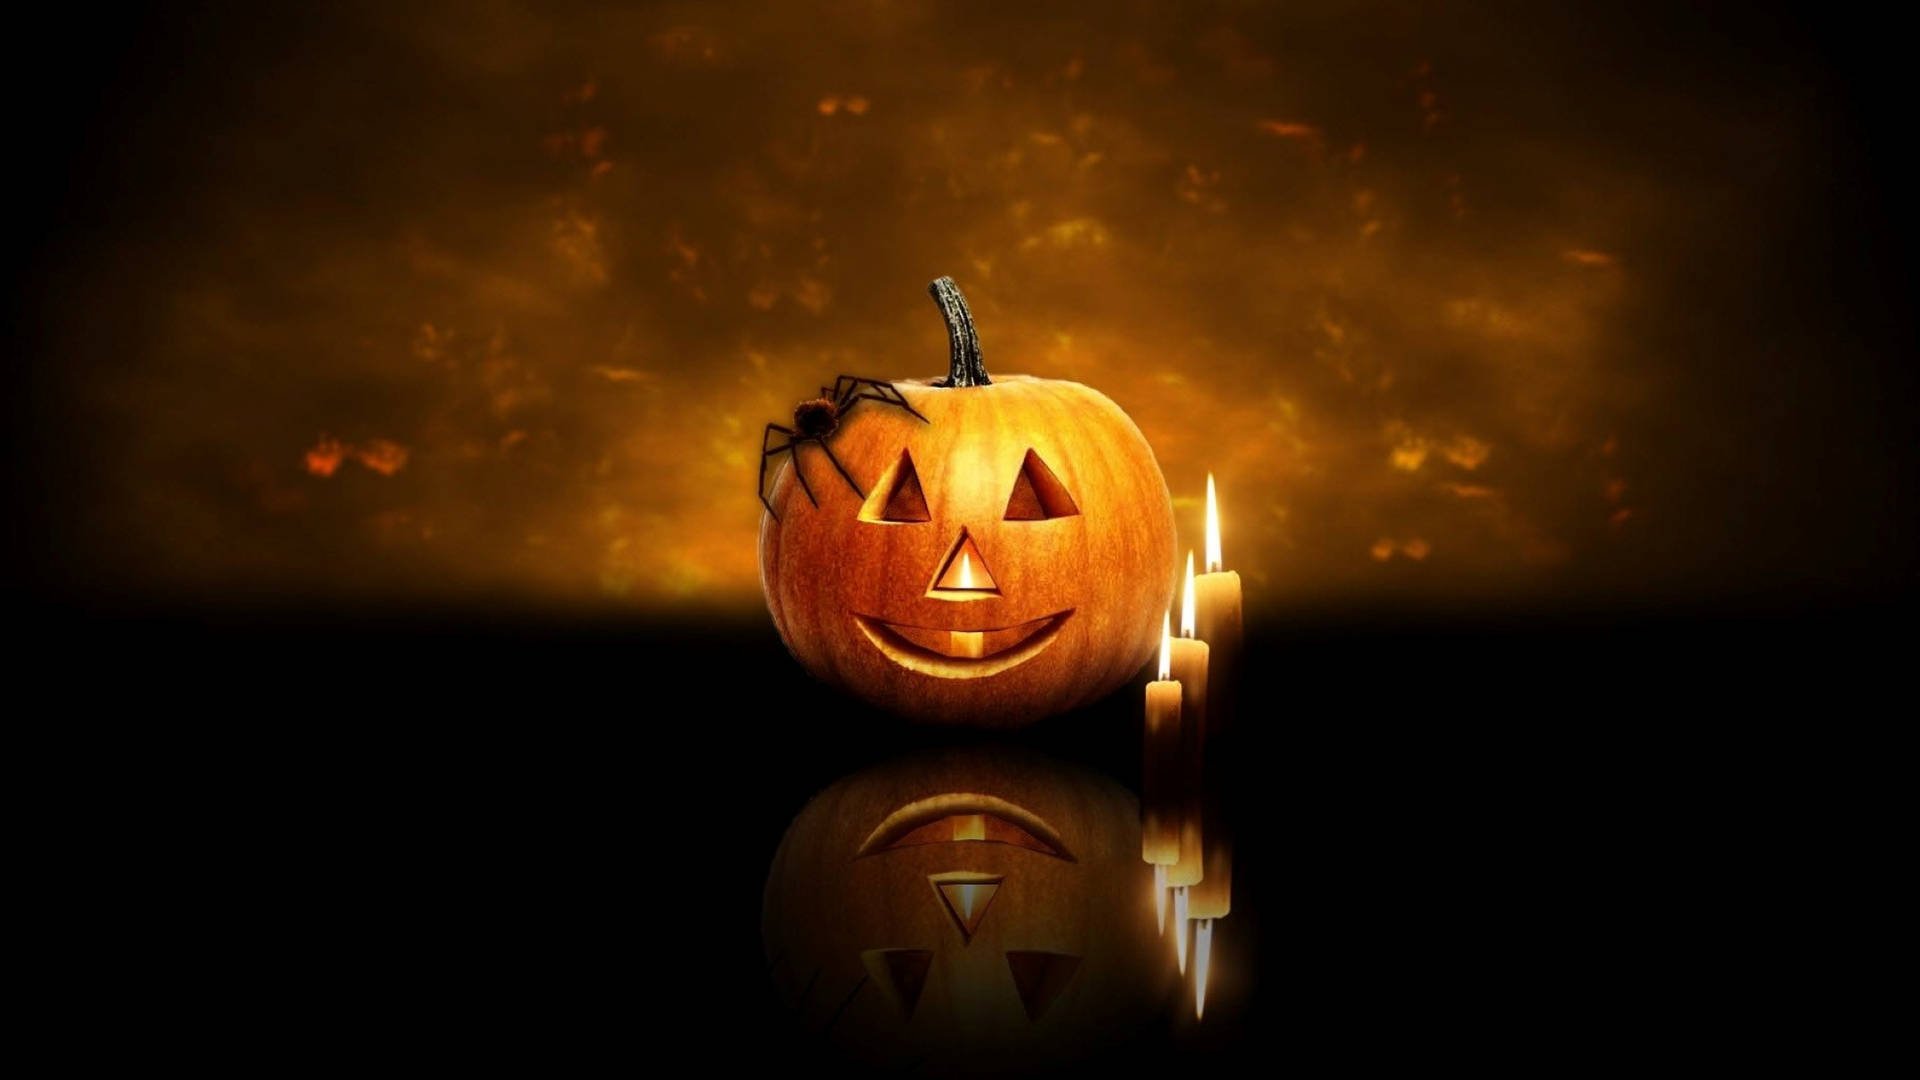 Download Pumpkin Candles Halloween Aesthetic Wallpaper